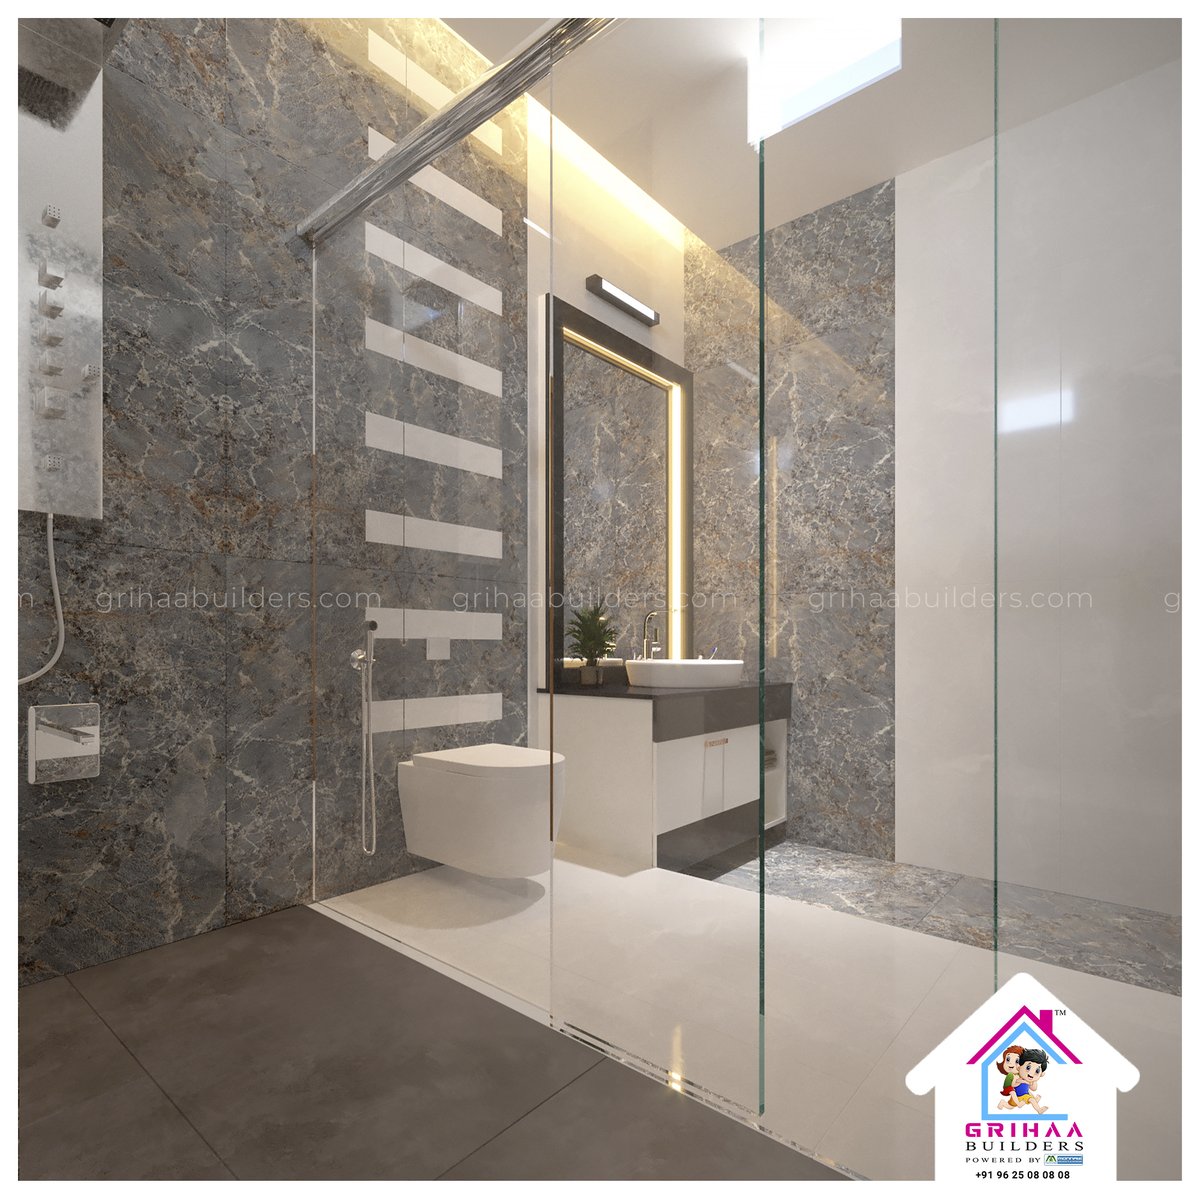 Modern Small Bathroom Design Idea
.
.
📞call: +91 9625080808
📧email: grihaasales@gamil.com
🌎web: grihaabuilders.com
.
.
.
#bathroominterior #bathroomdesign #bathroomdecor #bathroominspiration #bathroom #bathroominspo #bathroomideas #interiordesign #bathroomstyle